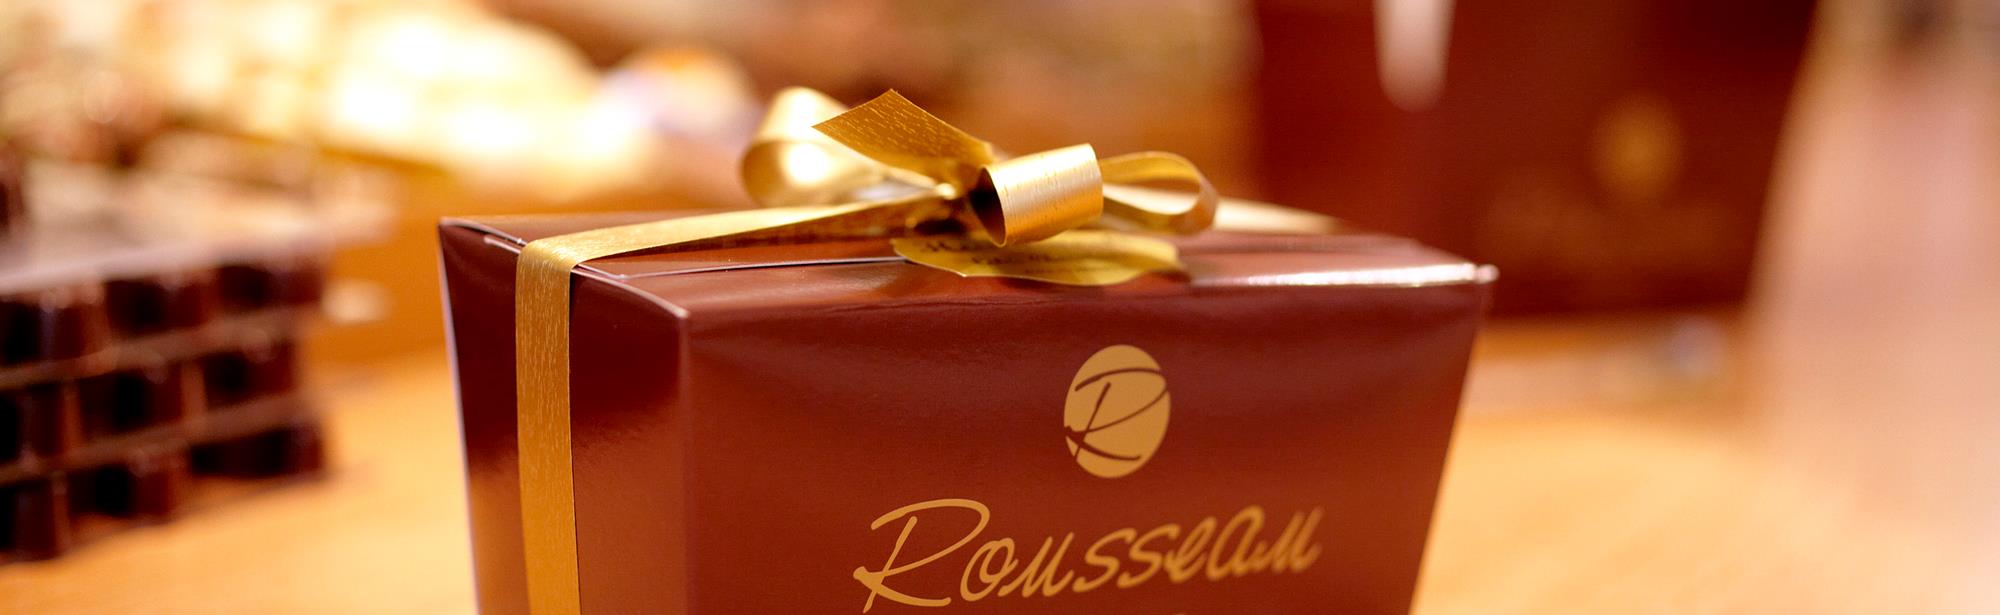 Rousseau Chocolade Gulpen